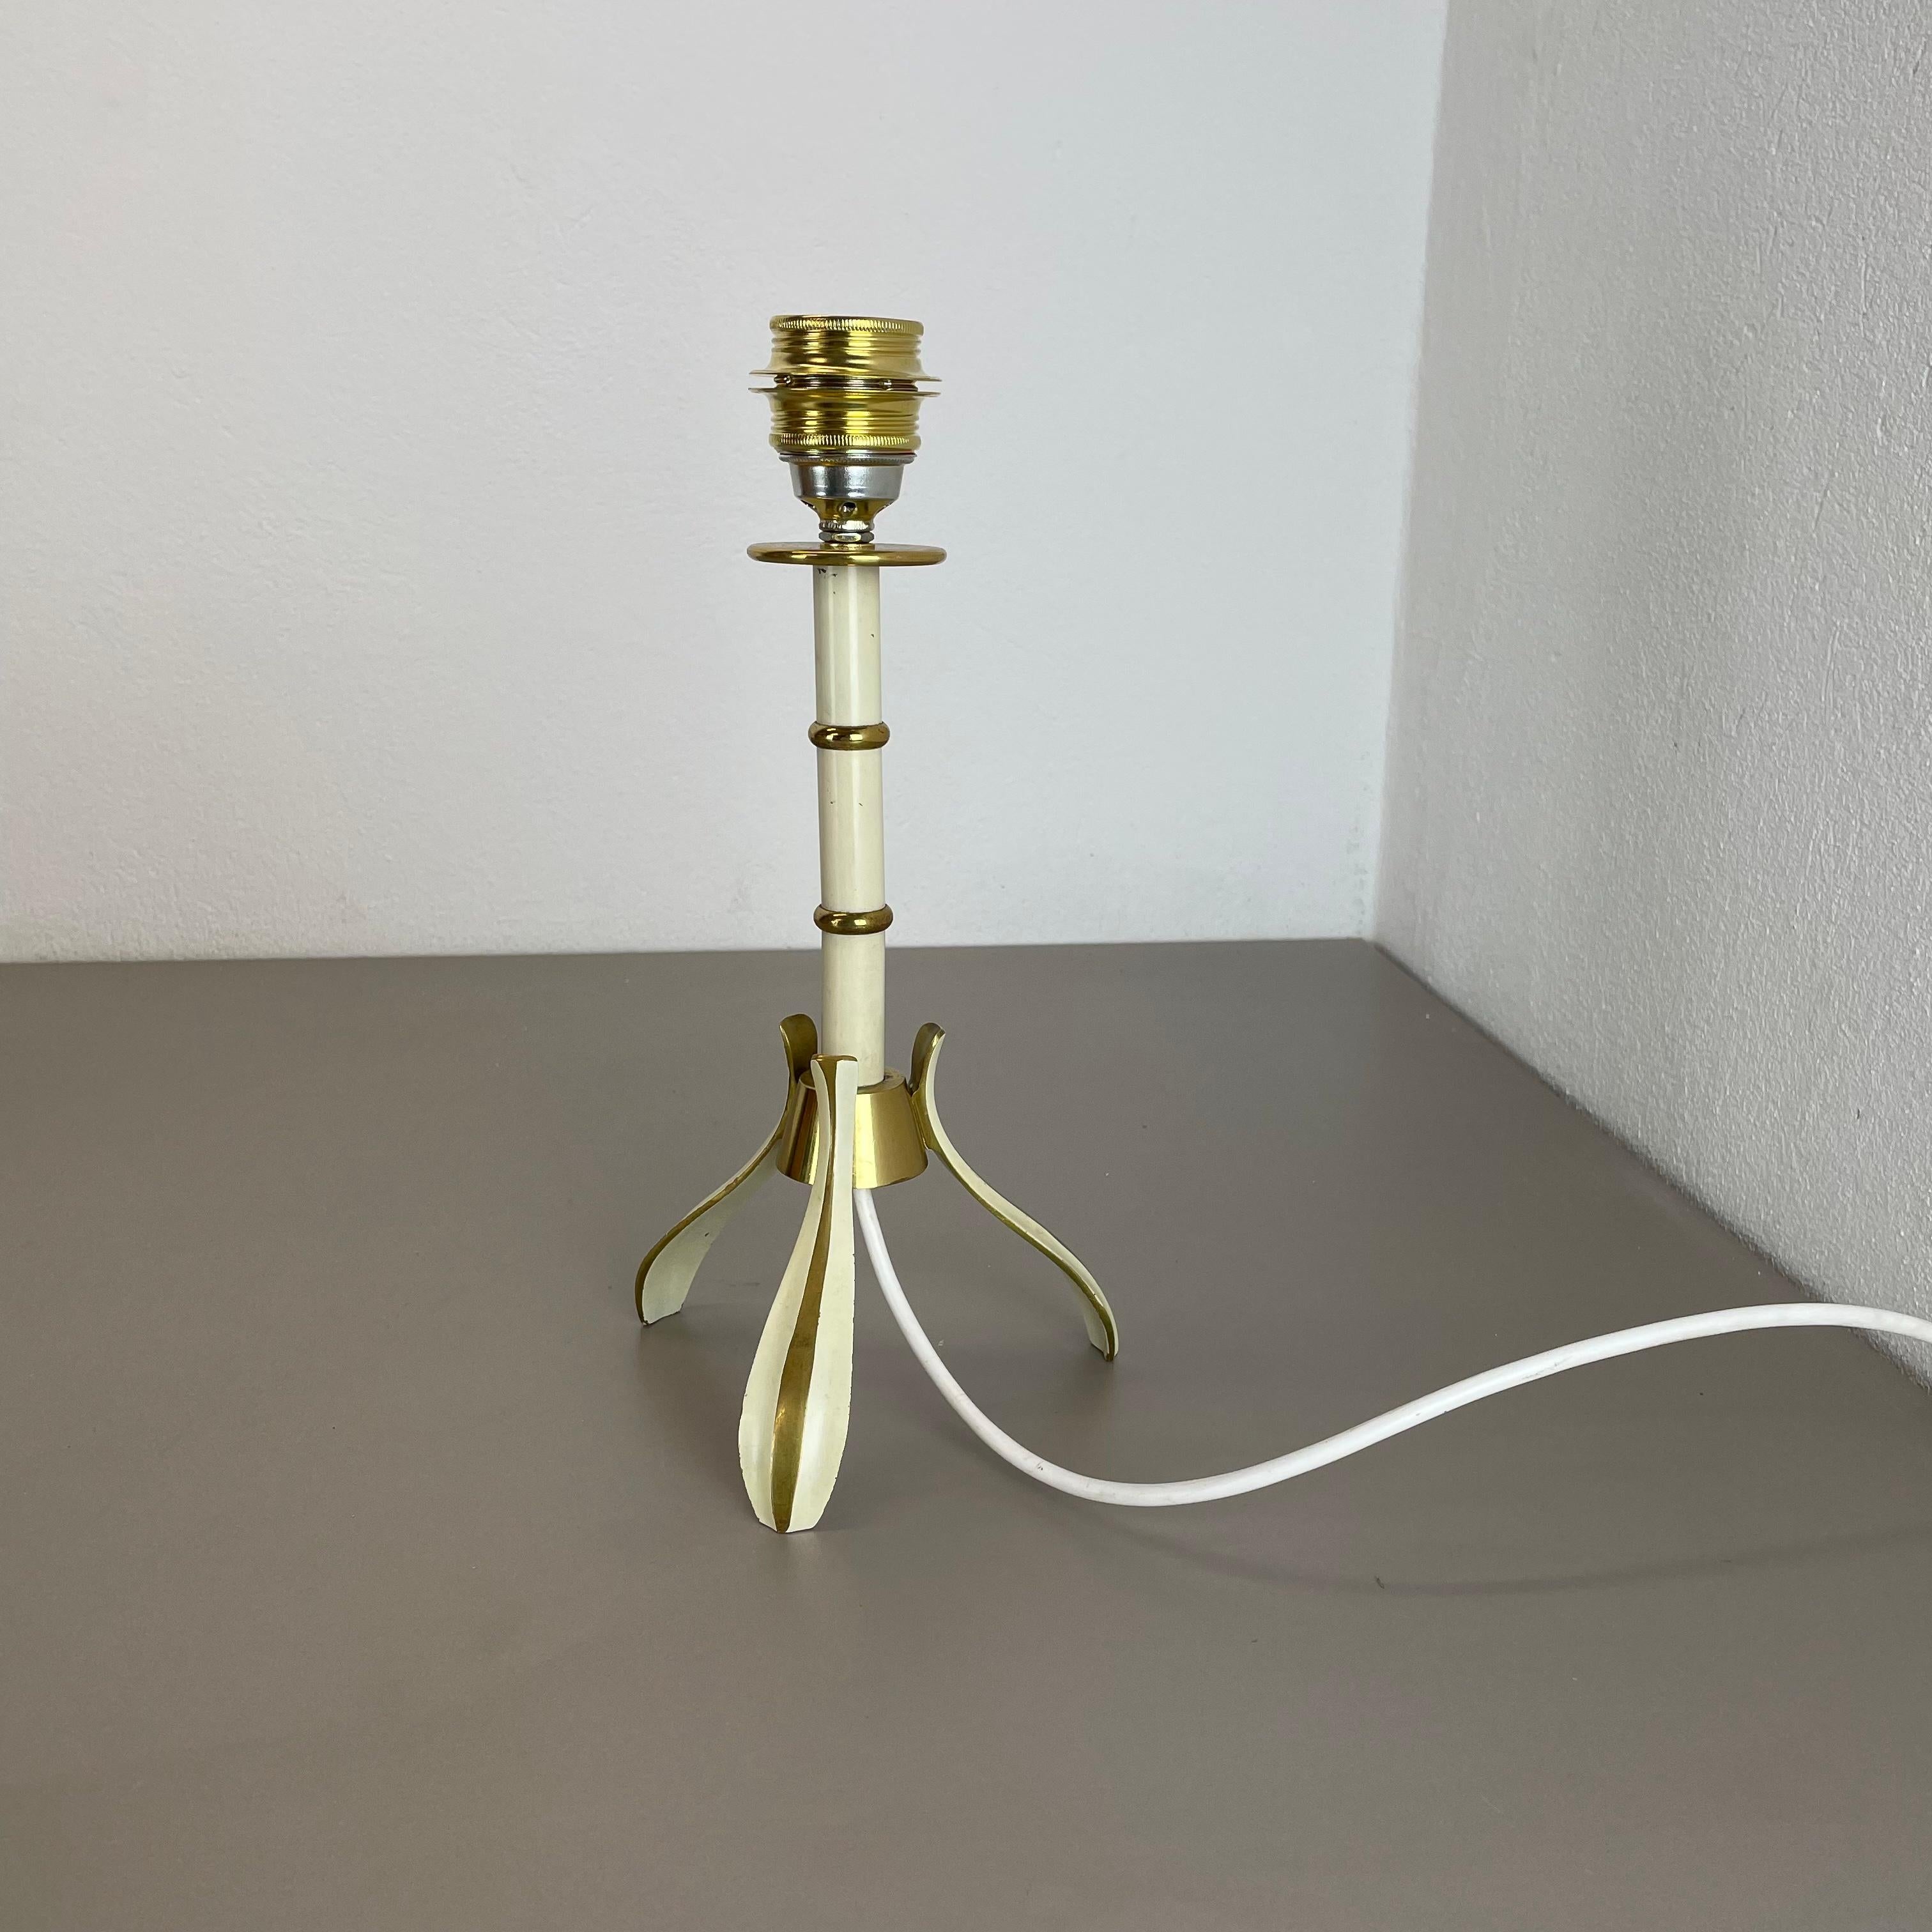 Article:

Table light


Origin:

Germany


Producer:

Vereinigte Werkstätten München


Age:

1950s






This original vintage Minimalist table light was produced in the 1950s in Germany by Vereinigte Werkstätten München. It